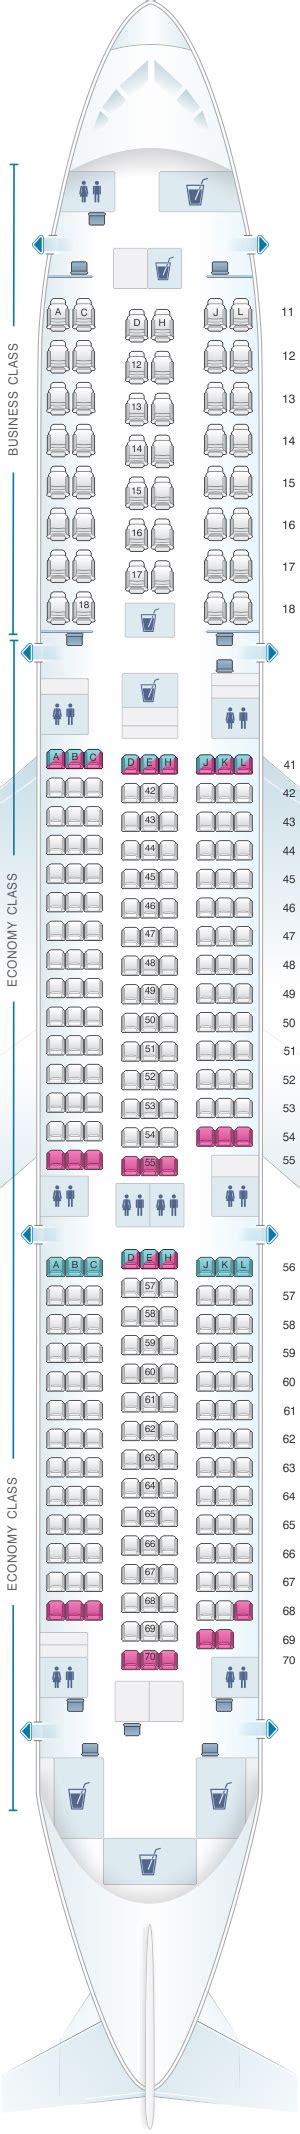 Boeing 787 9 Seat Map Cabinets Matttroy